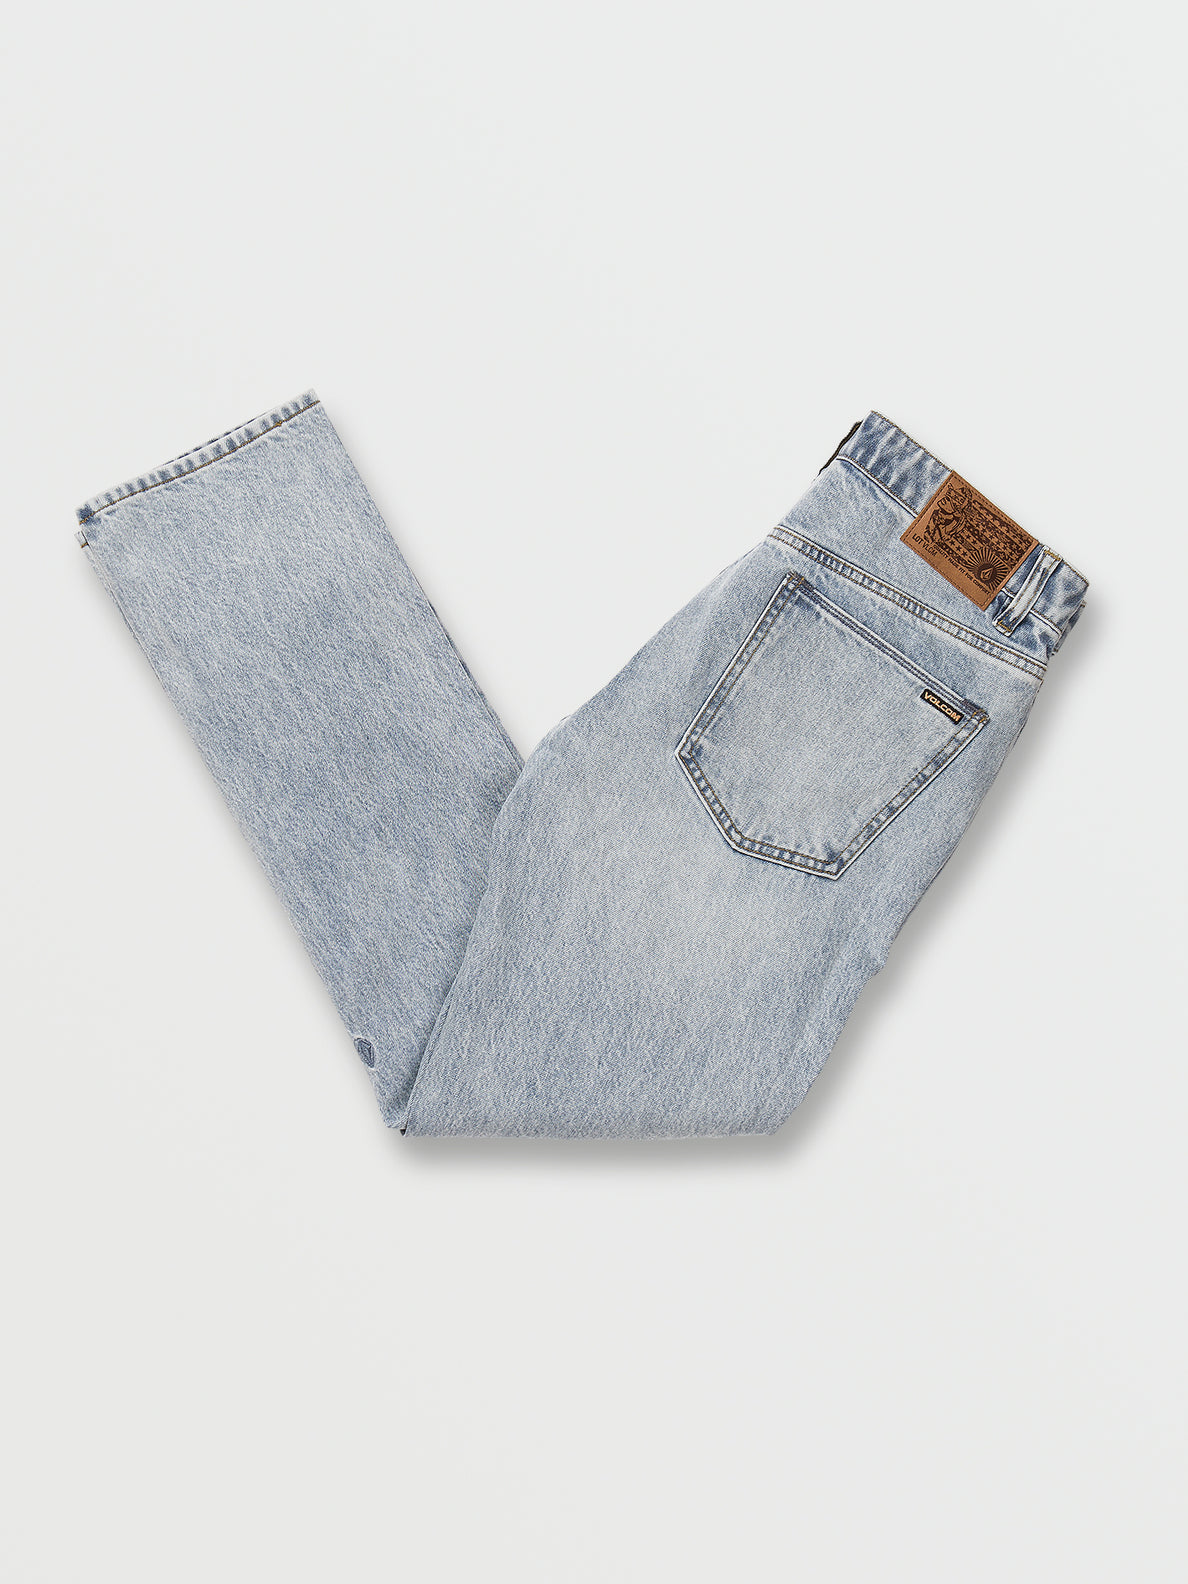 Vorta Slim Fit Jeans - Heavy Worn Faded (A1912302_HWR) [B]